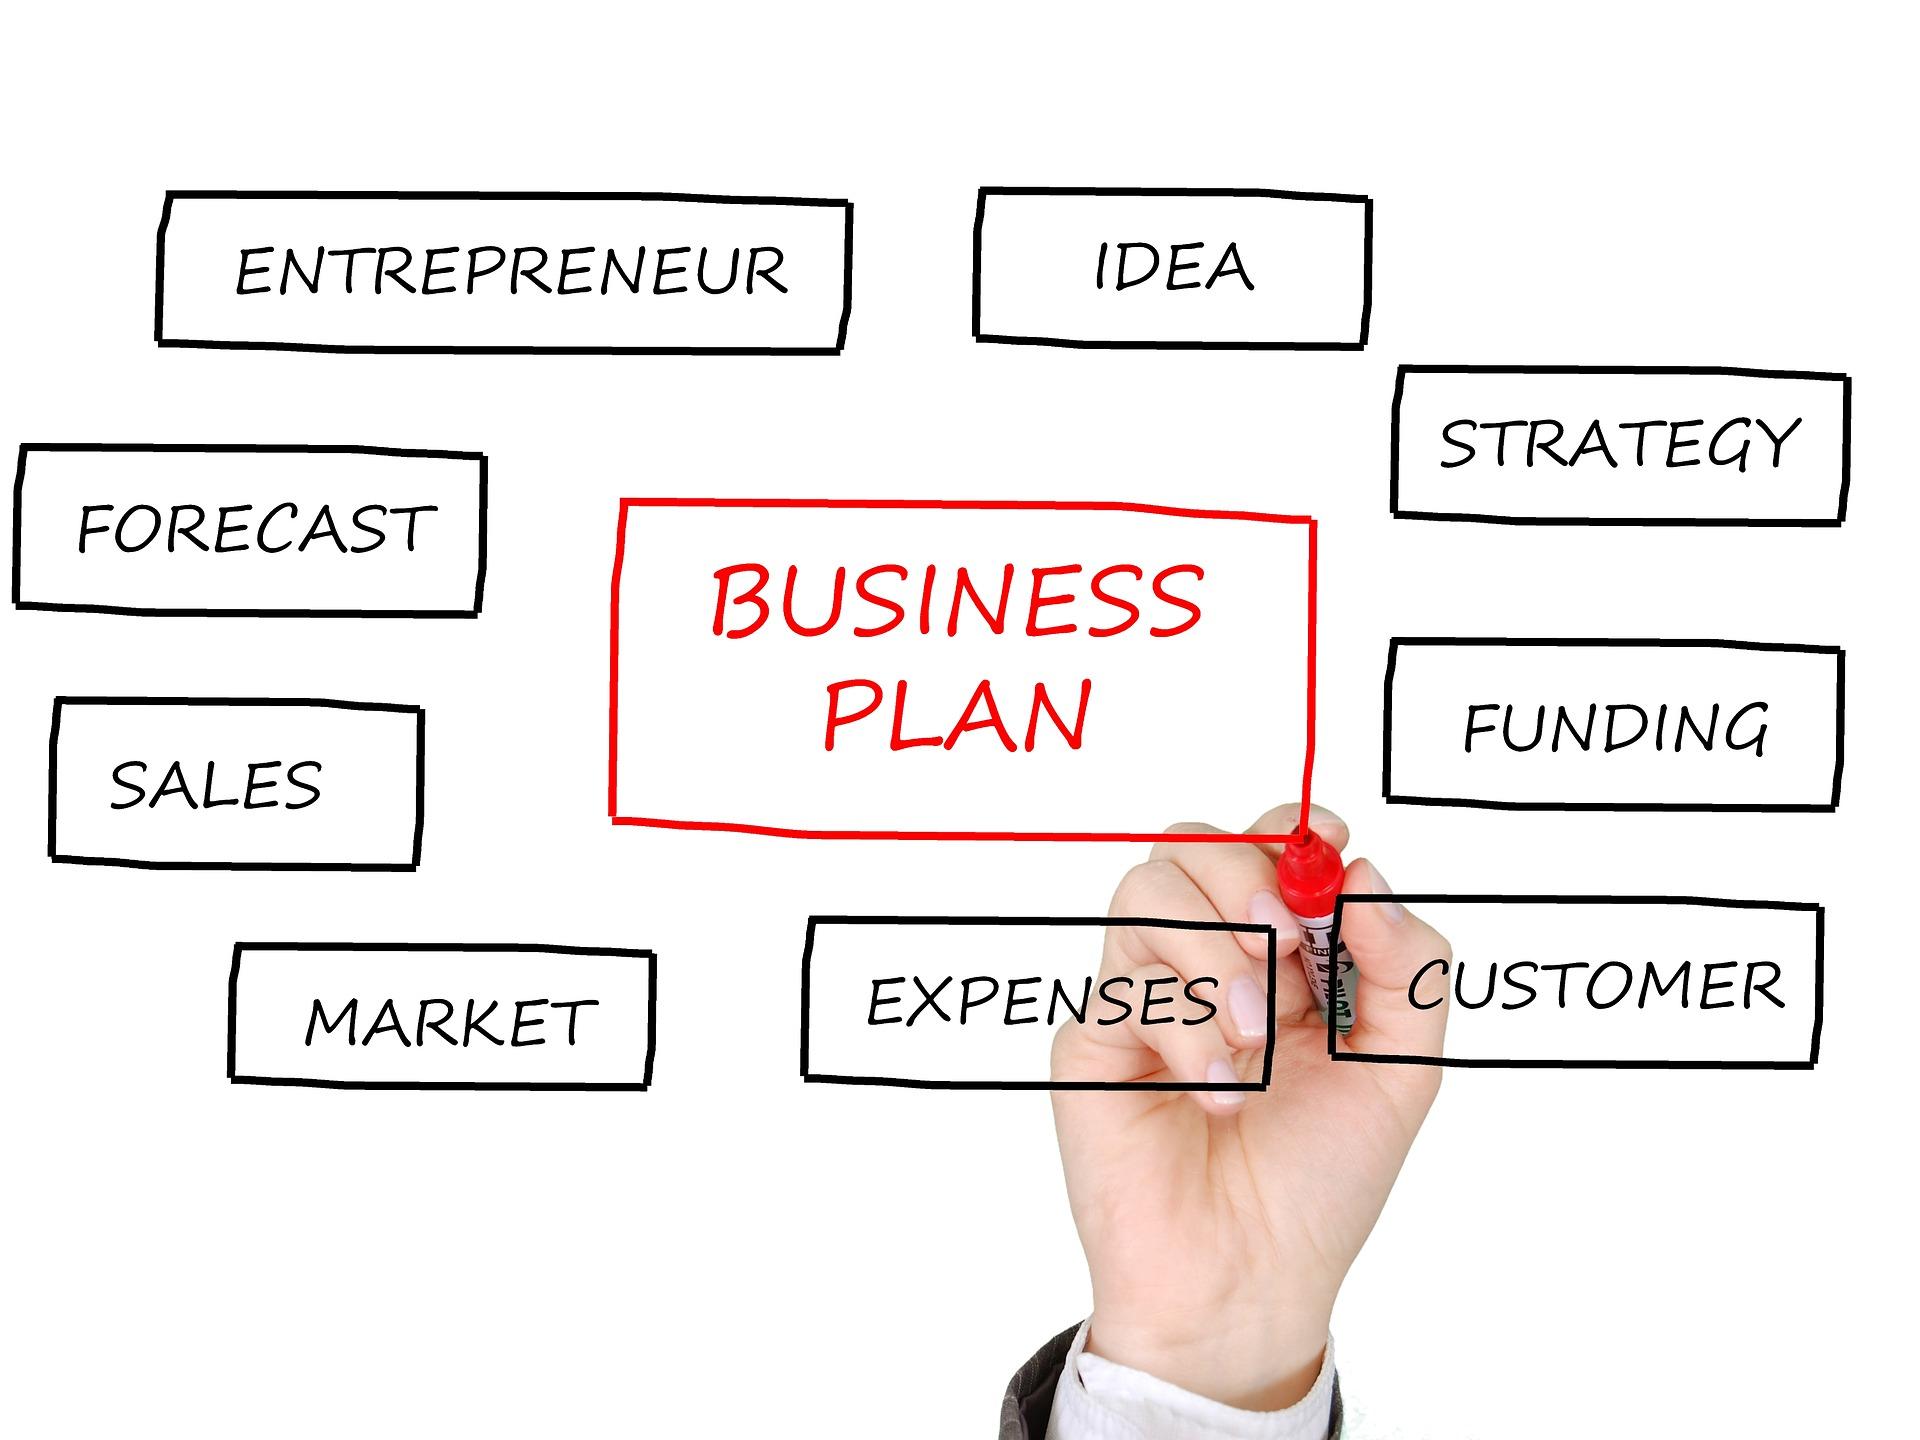 a business plan assesssment should have